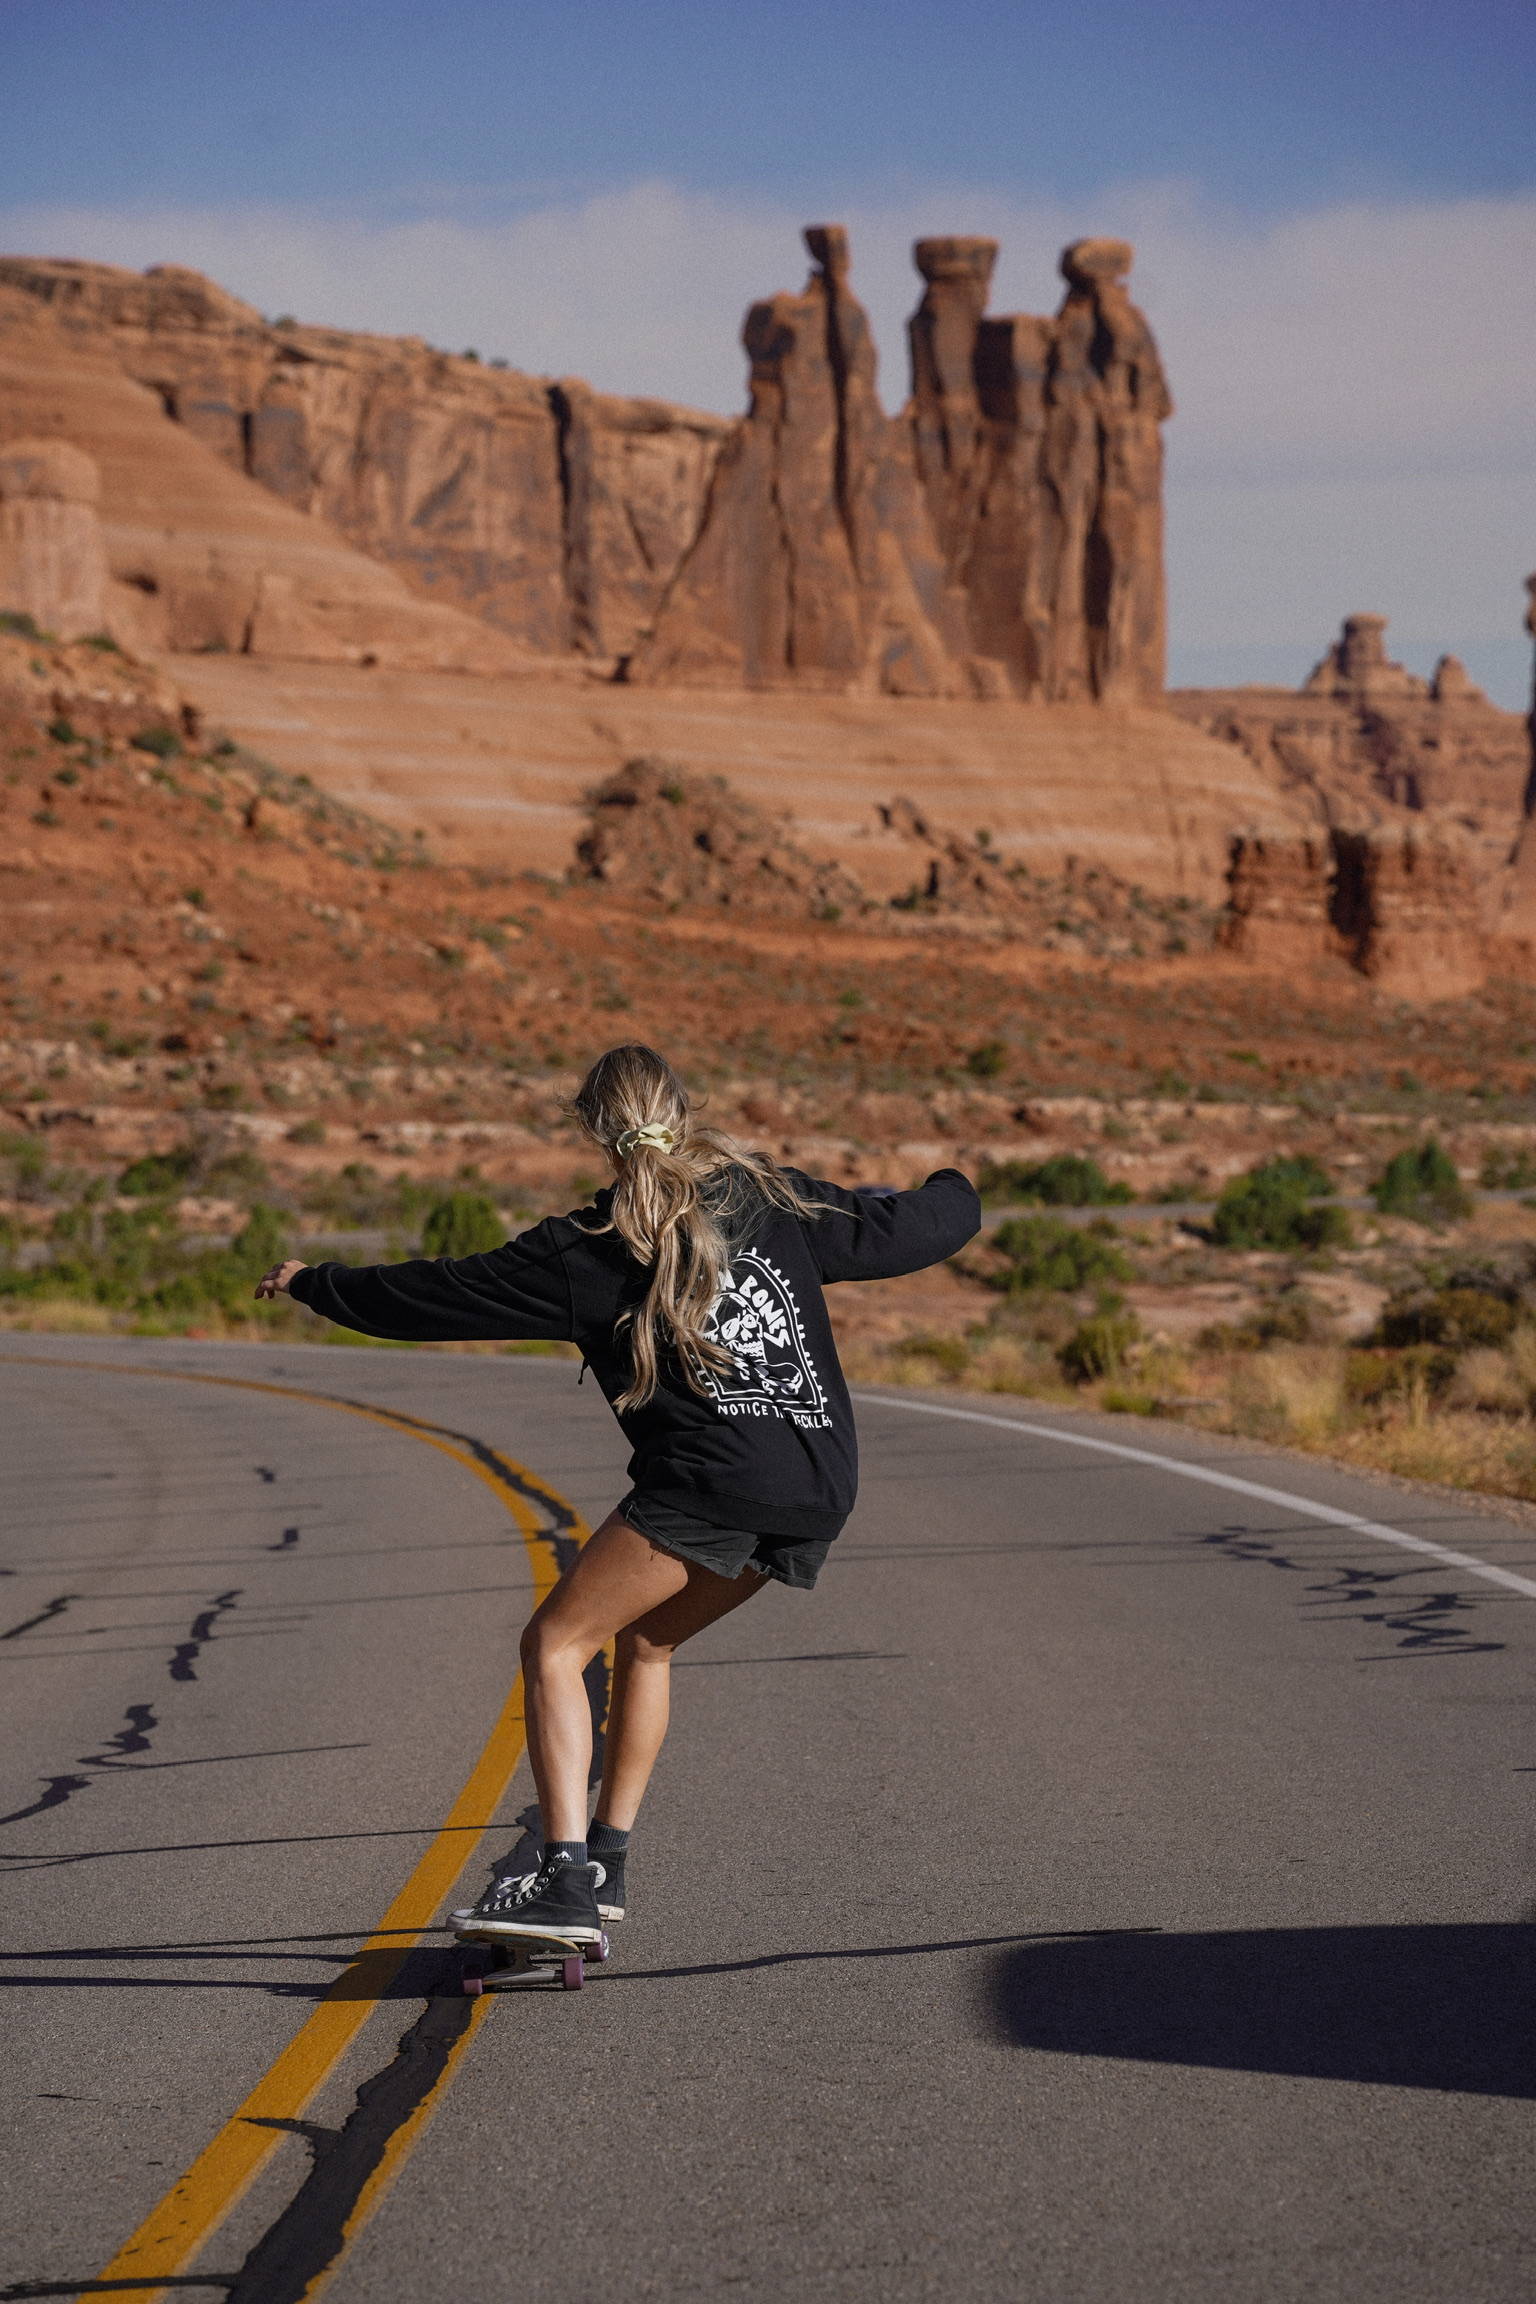 Female skateboarder riding on an empty street in Utah